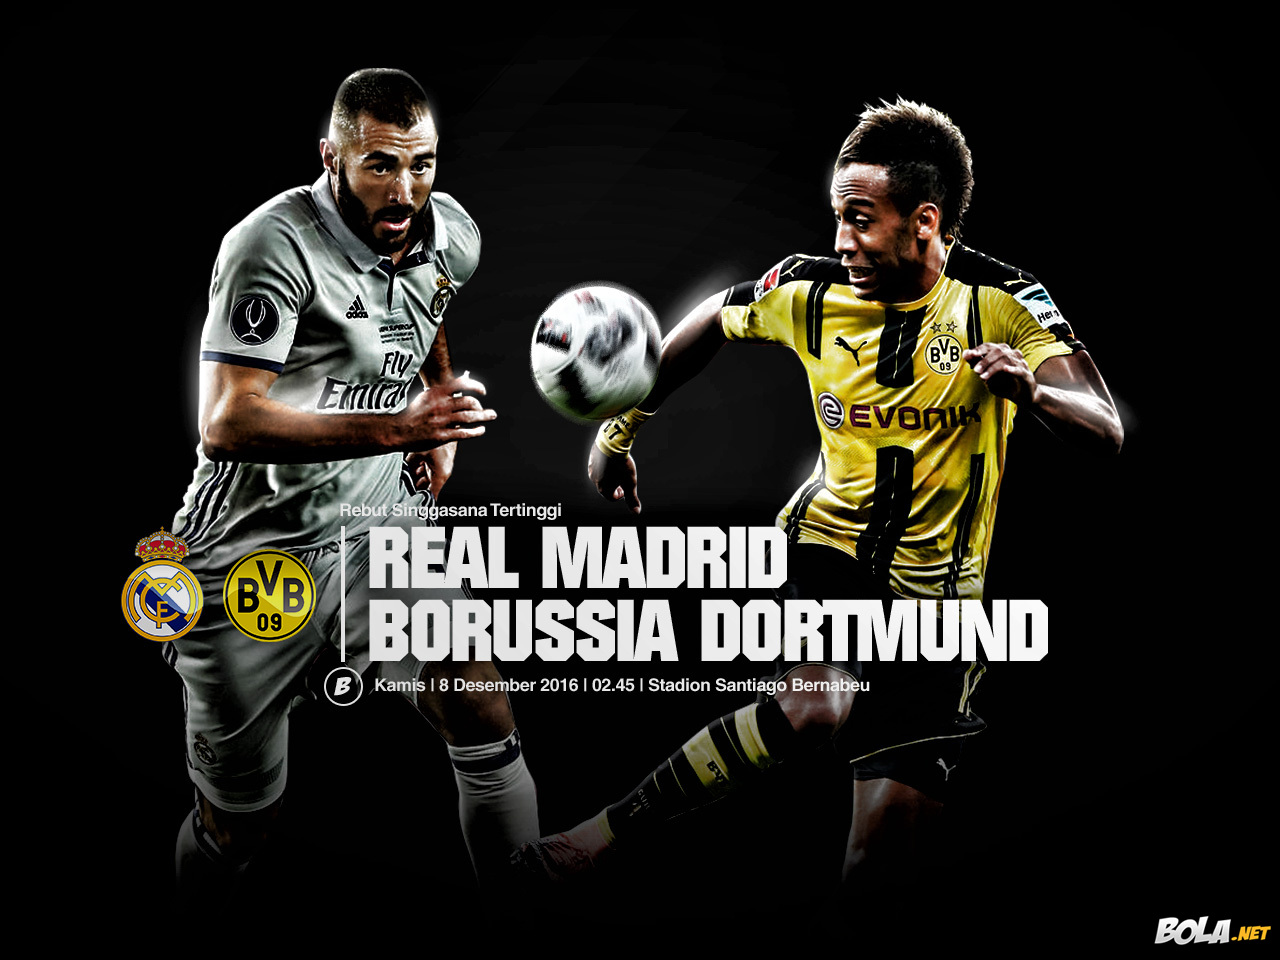 Deskripsi : Wallpaper Real Madrid Vs Borussia Dortmund, size: 1280x960